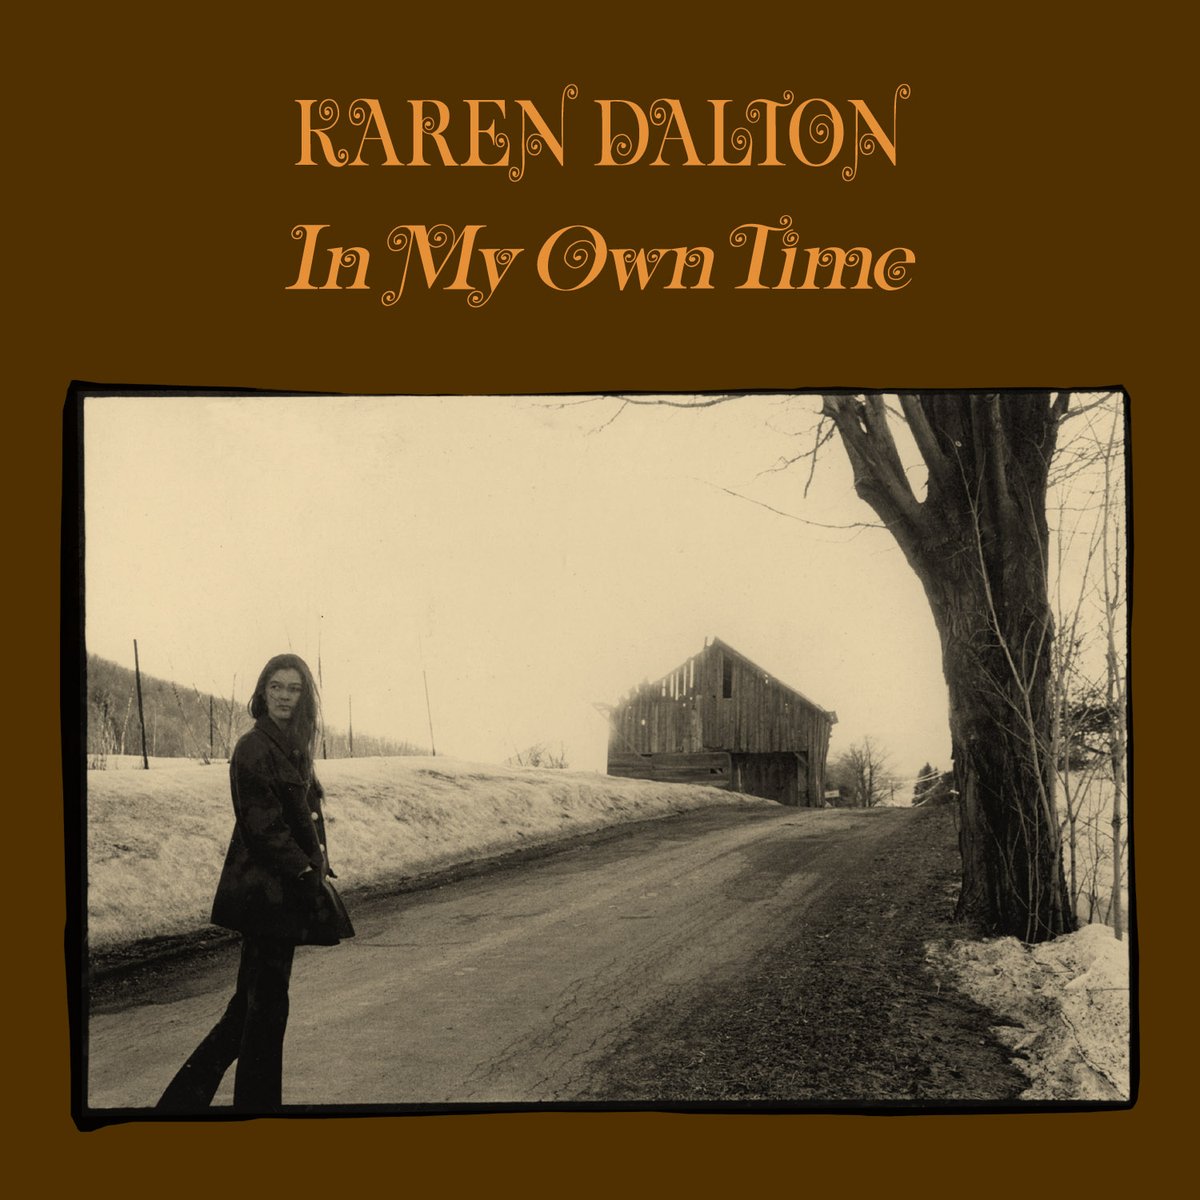 Did I mention the Karen Dalton records earlier?